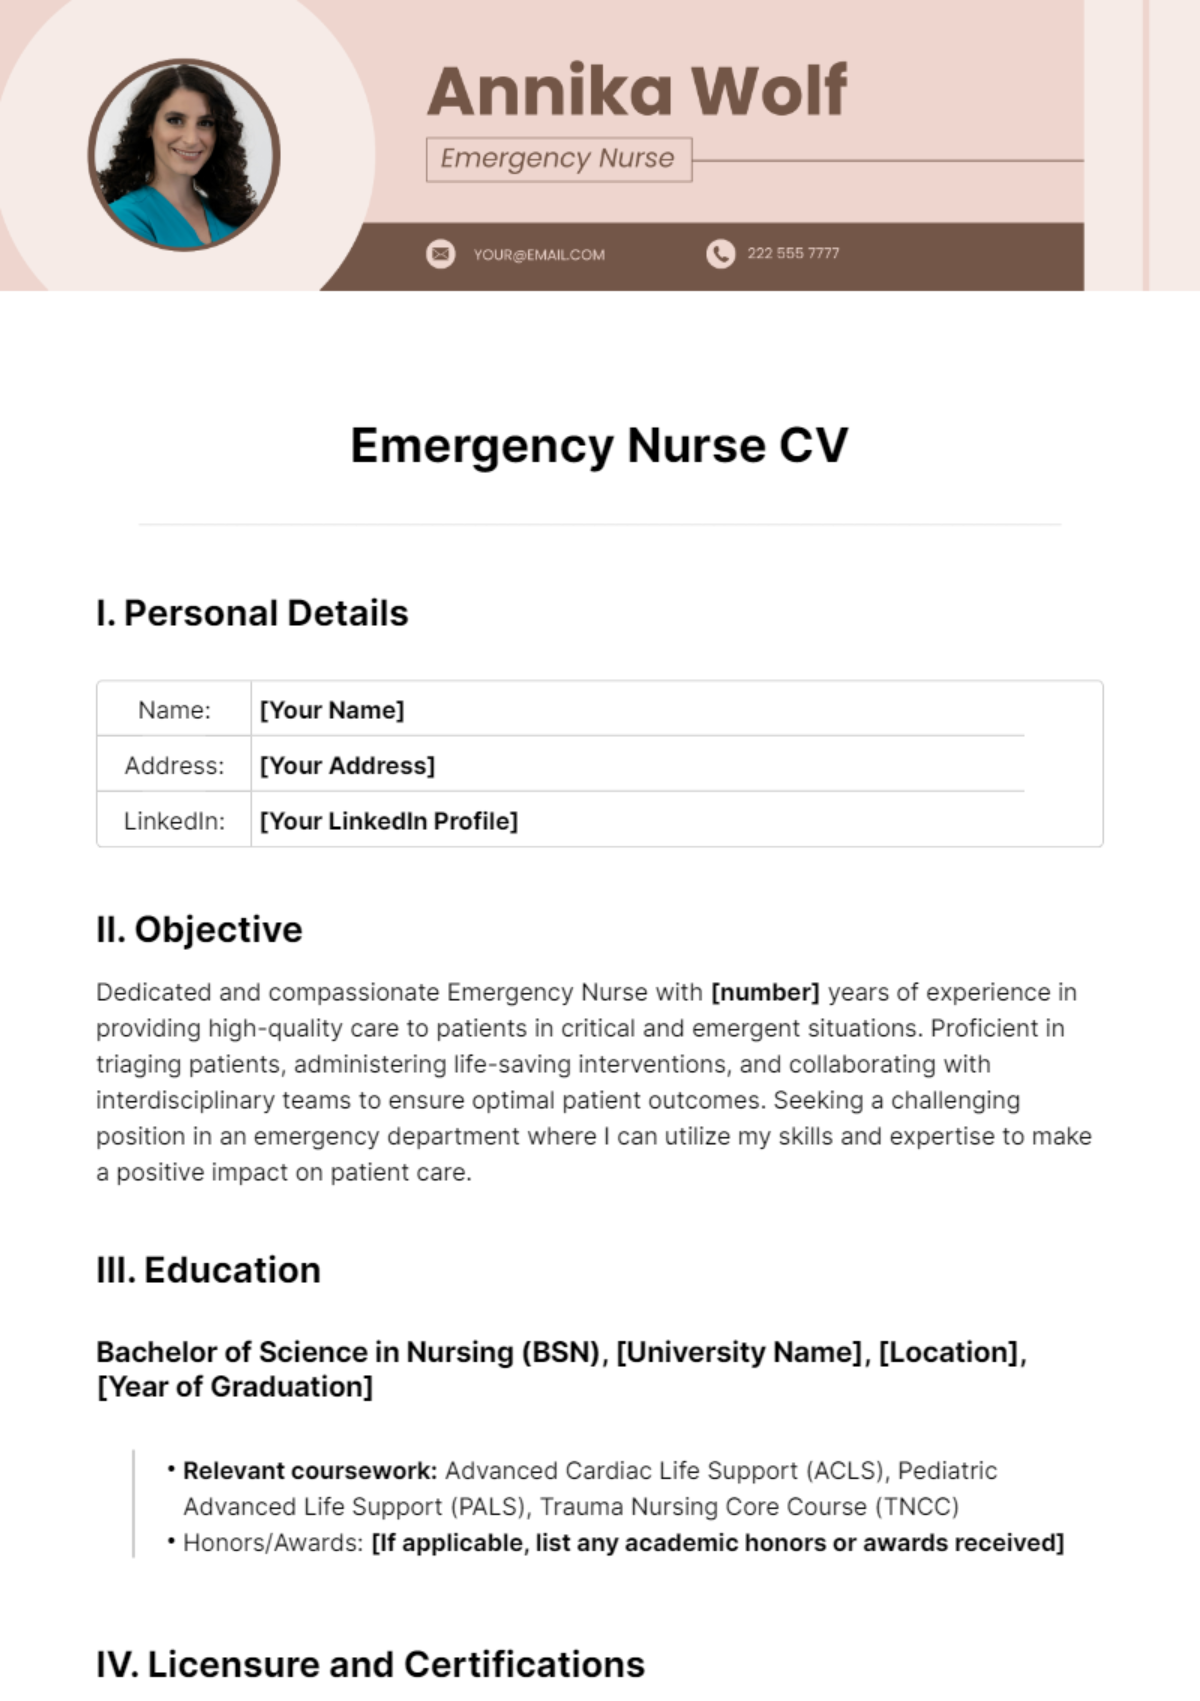 Emergency Nurse CV Template